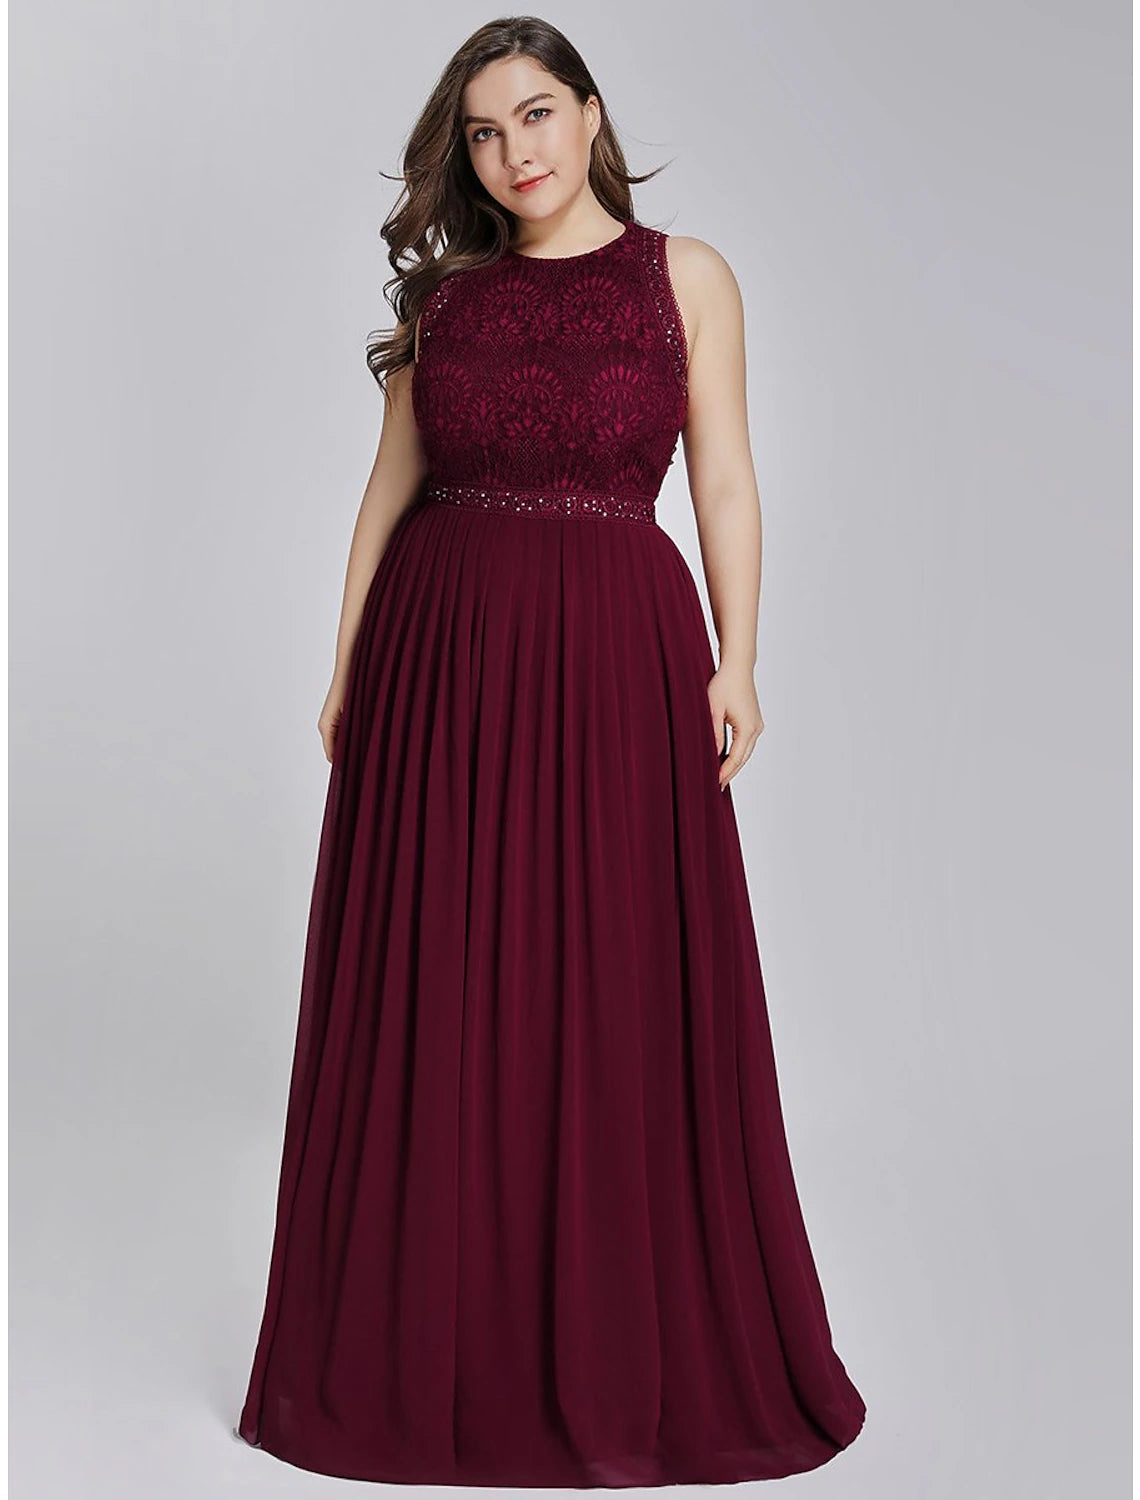 Wholesale A-Line Prom Dresses Elegant & Luxurious Dress Wedding Guest ...